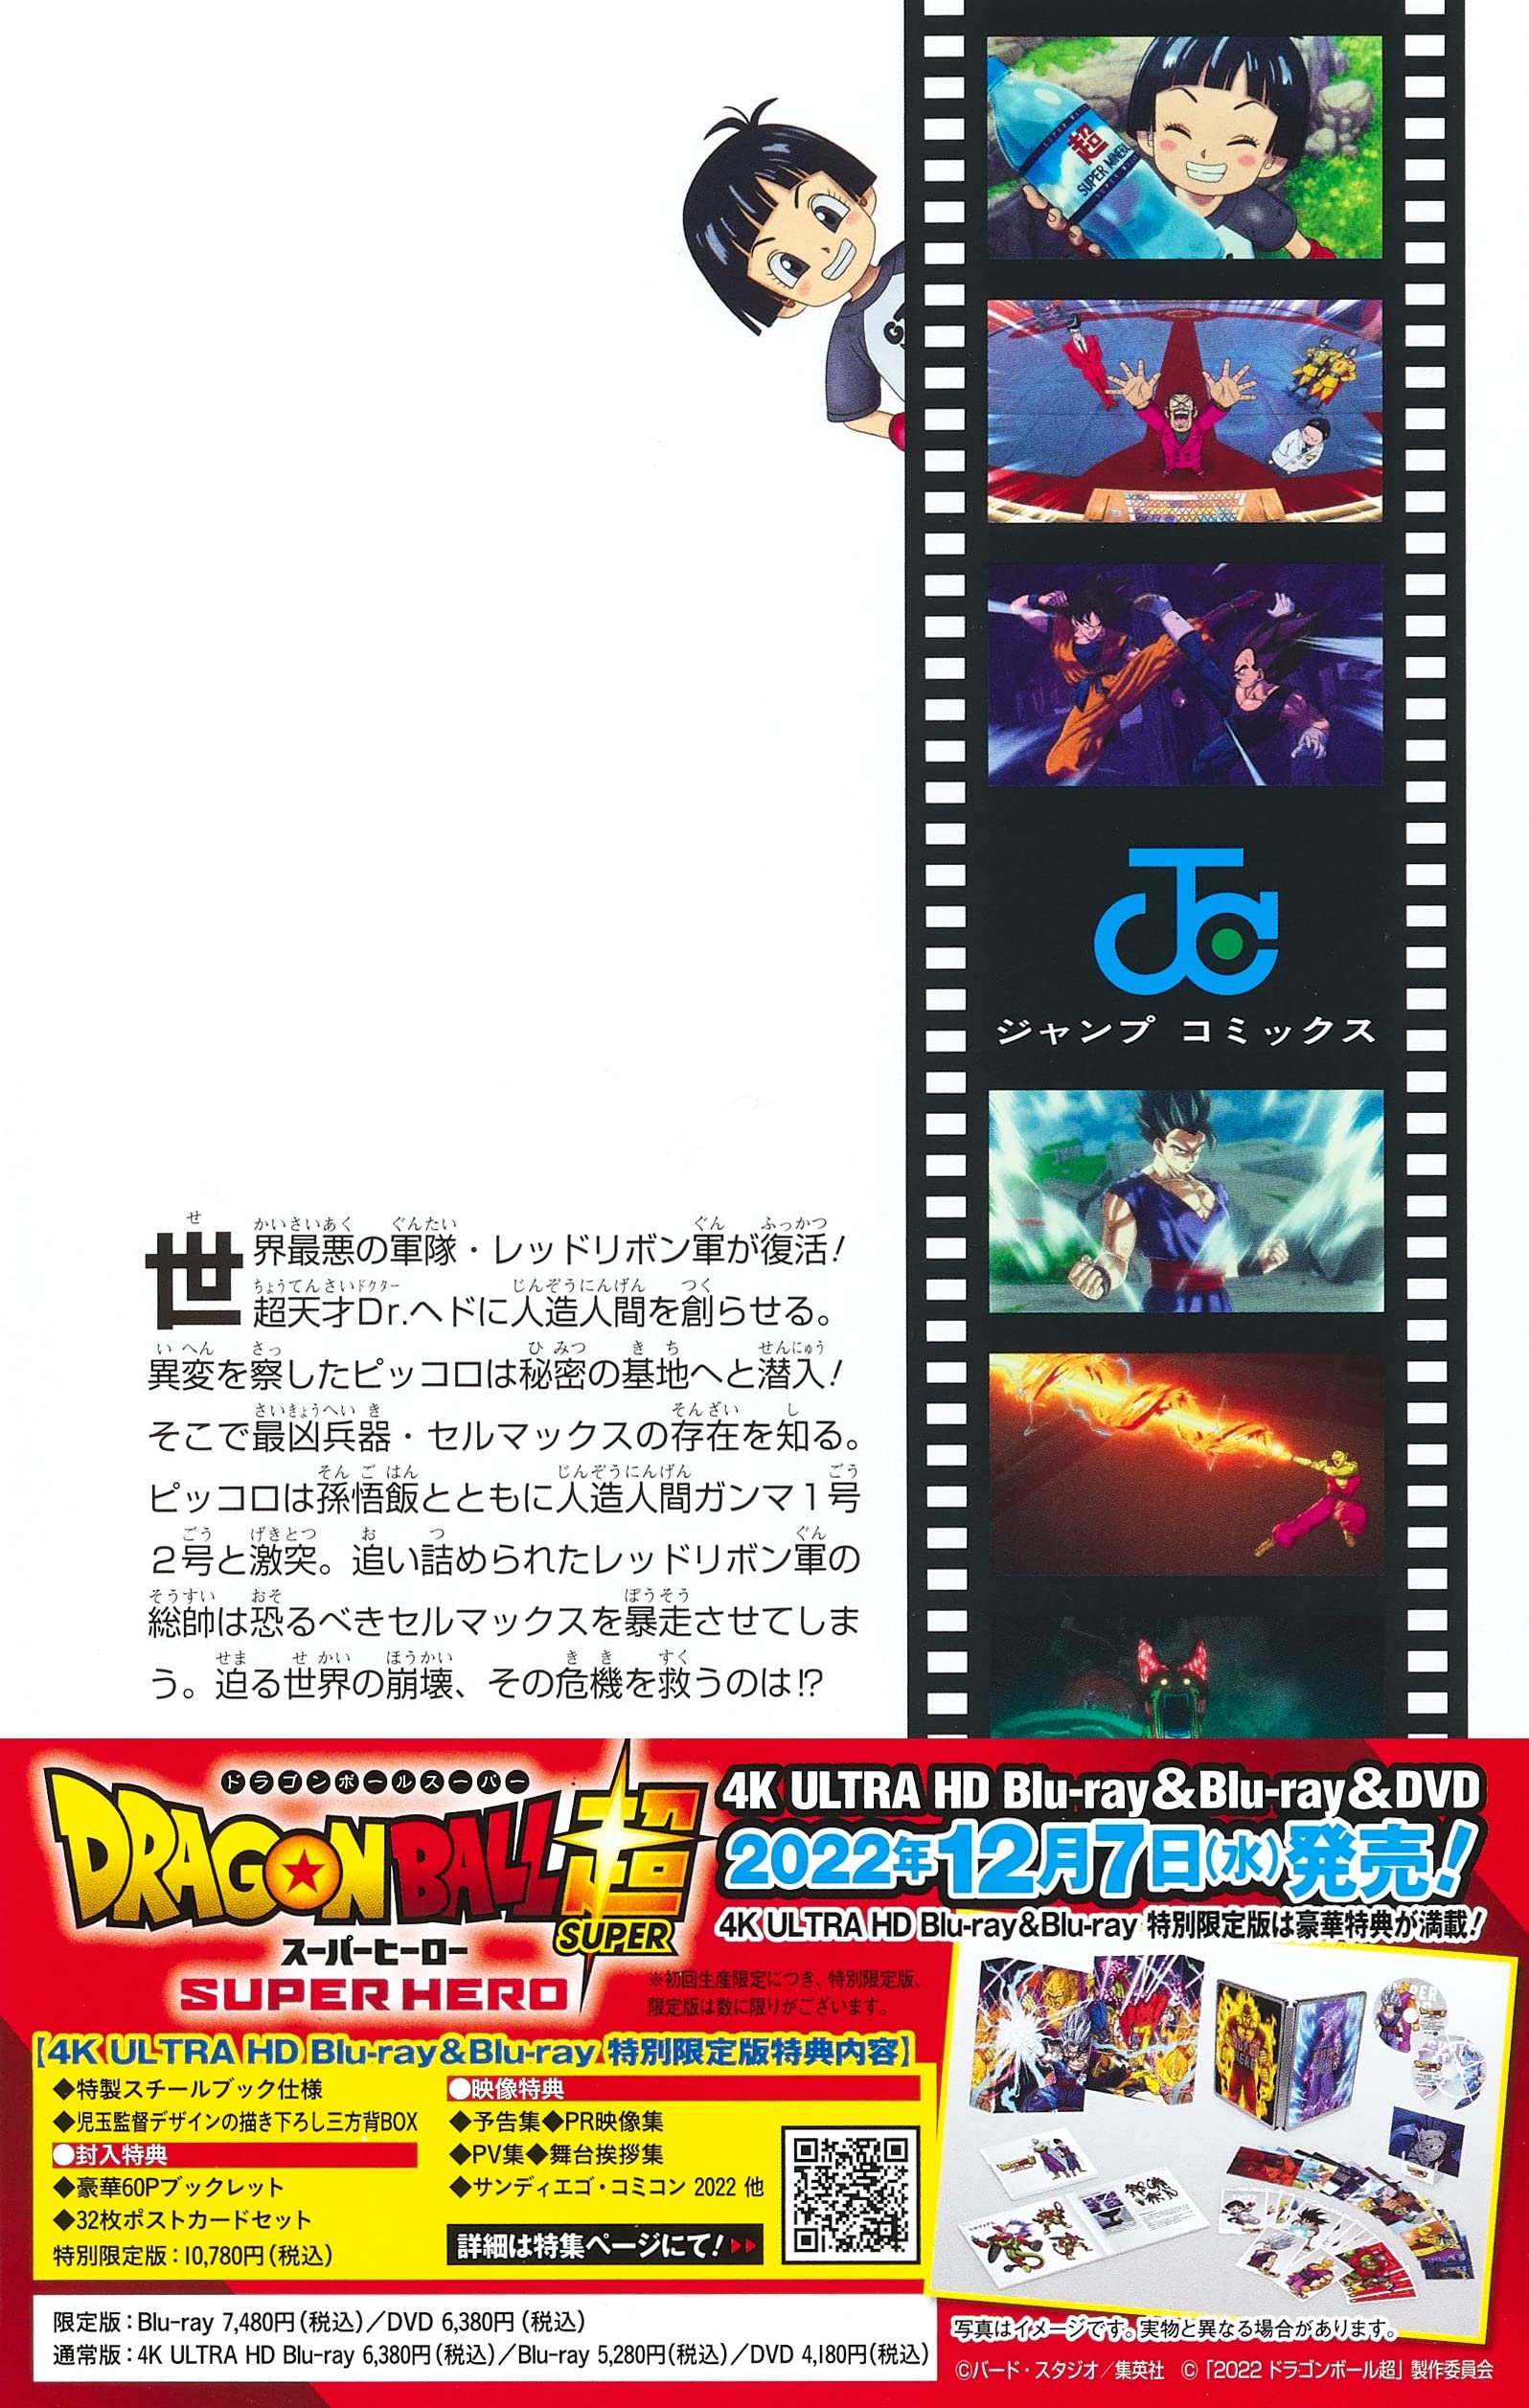  Dragon Ball Super: Super Hero - The Movie - Blu-ray : Video  Games